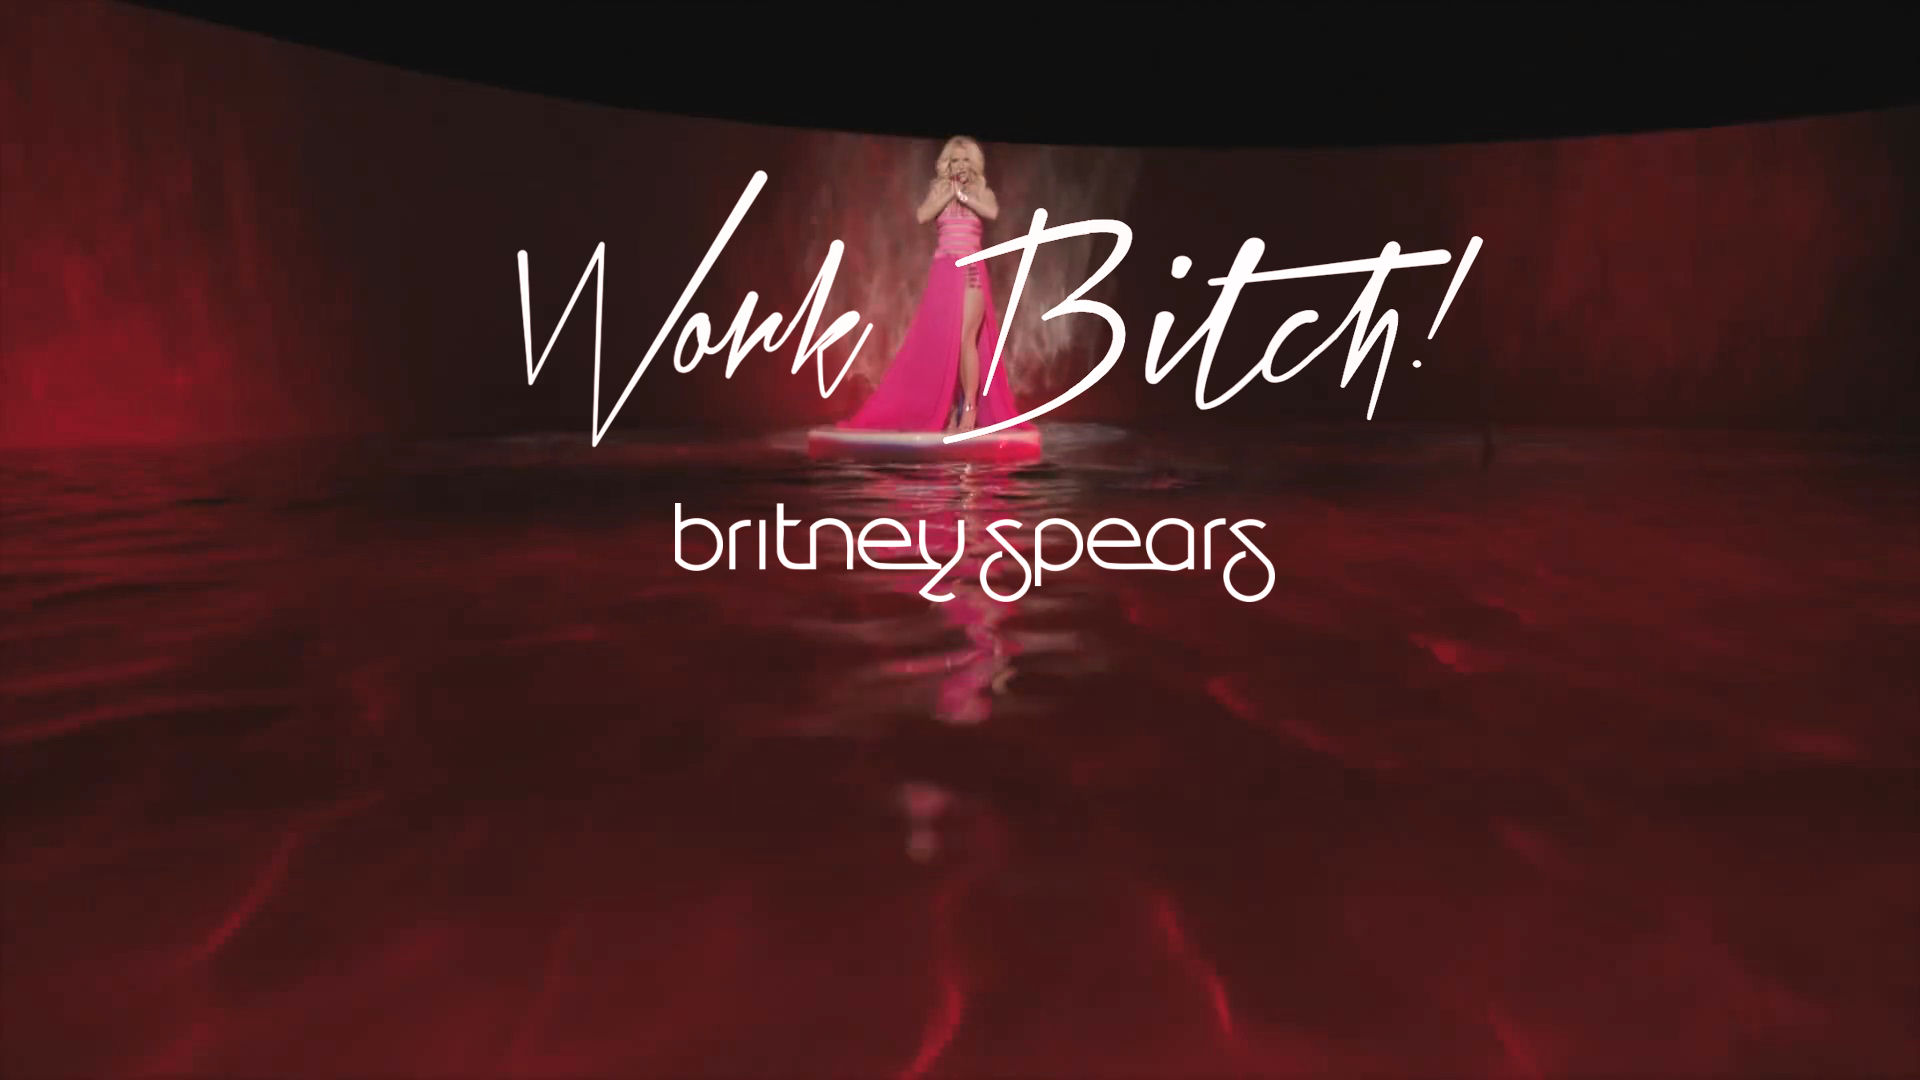 Britney spears vegas uncensored